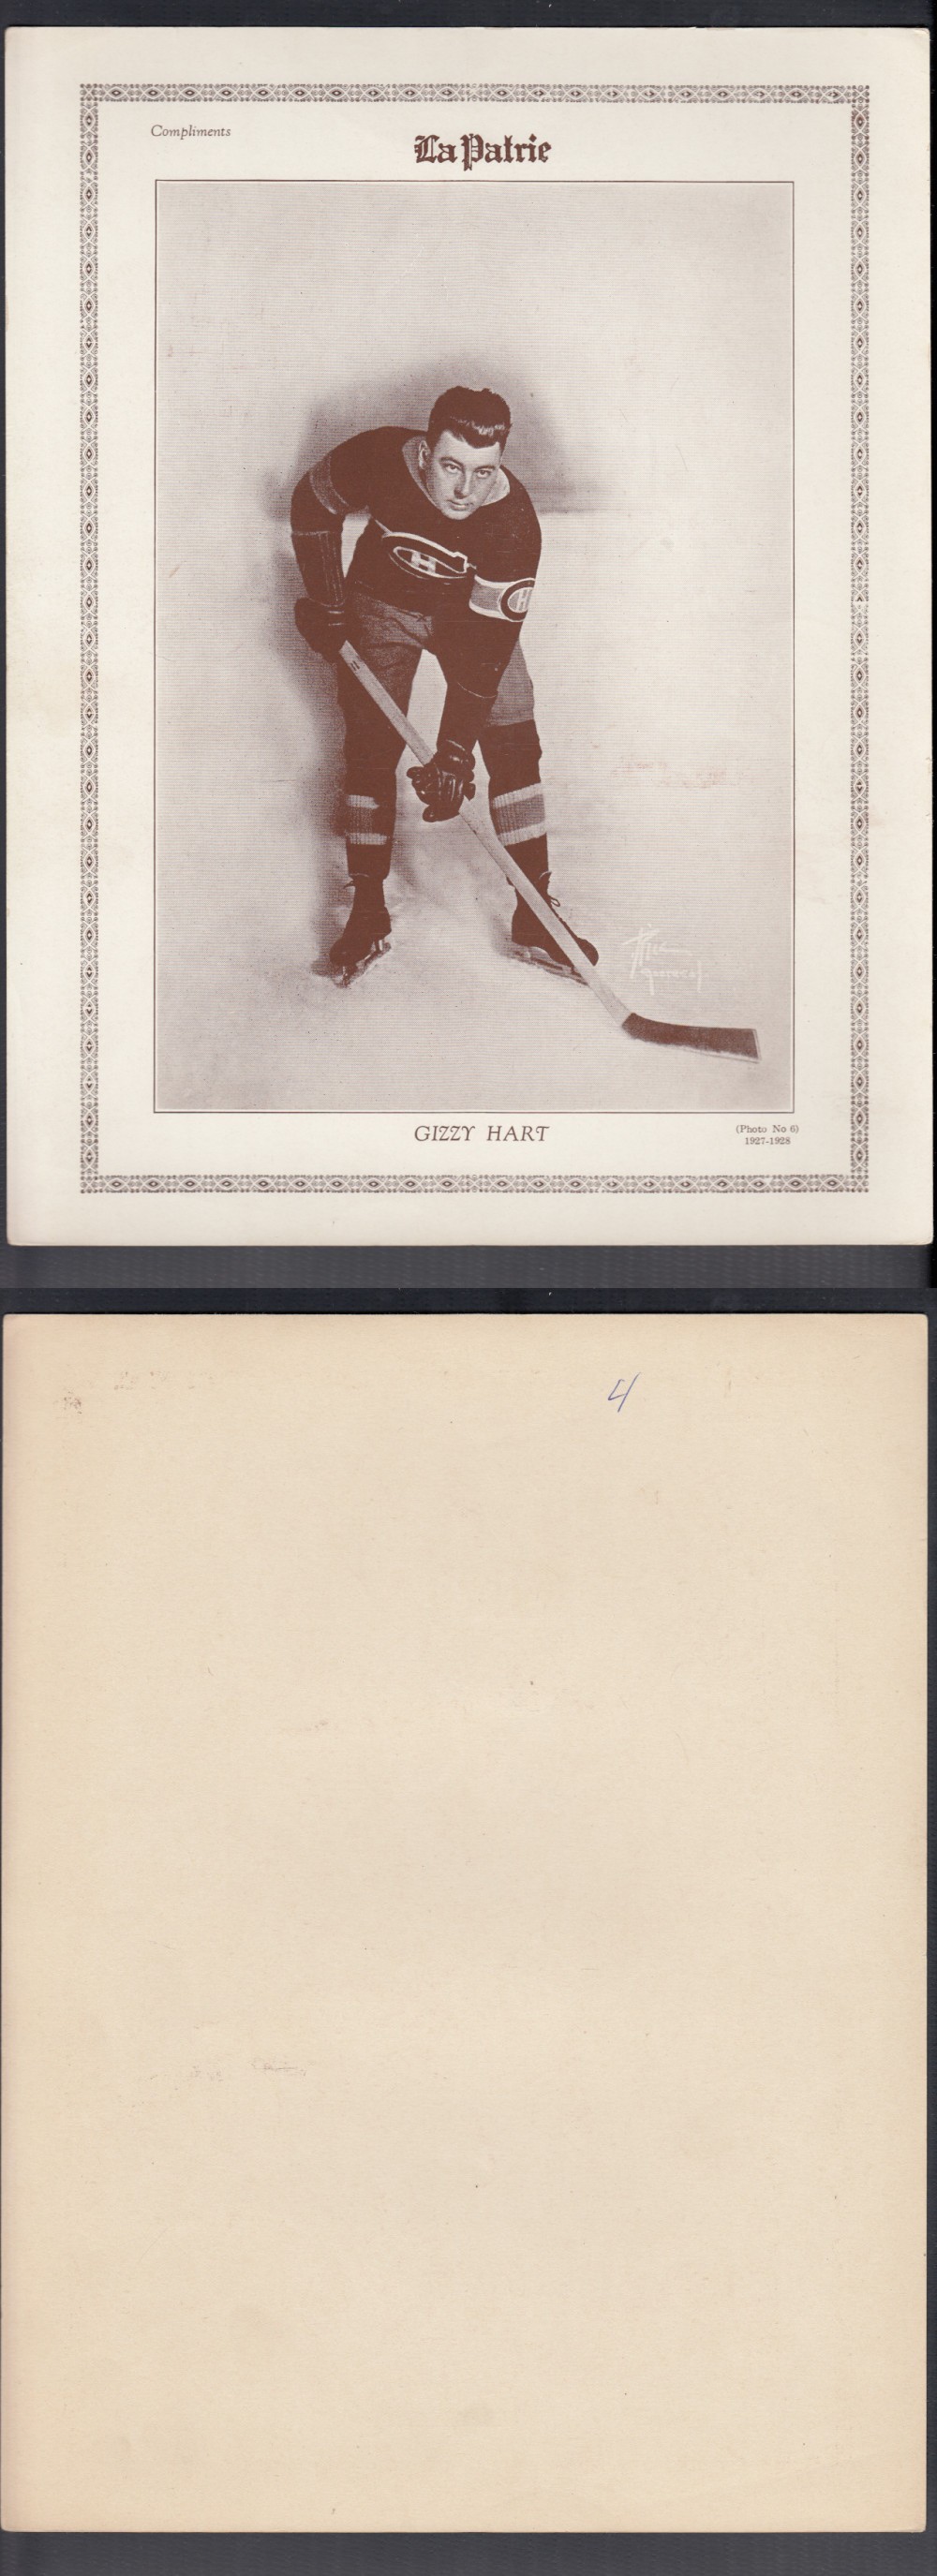 1927-28 LA PATRIE PHOTO #6 G. HART photo